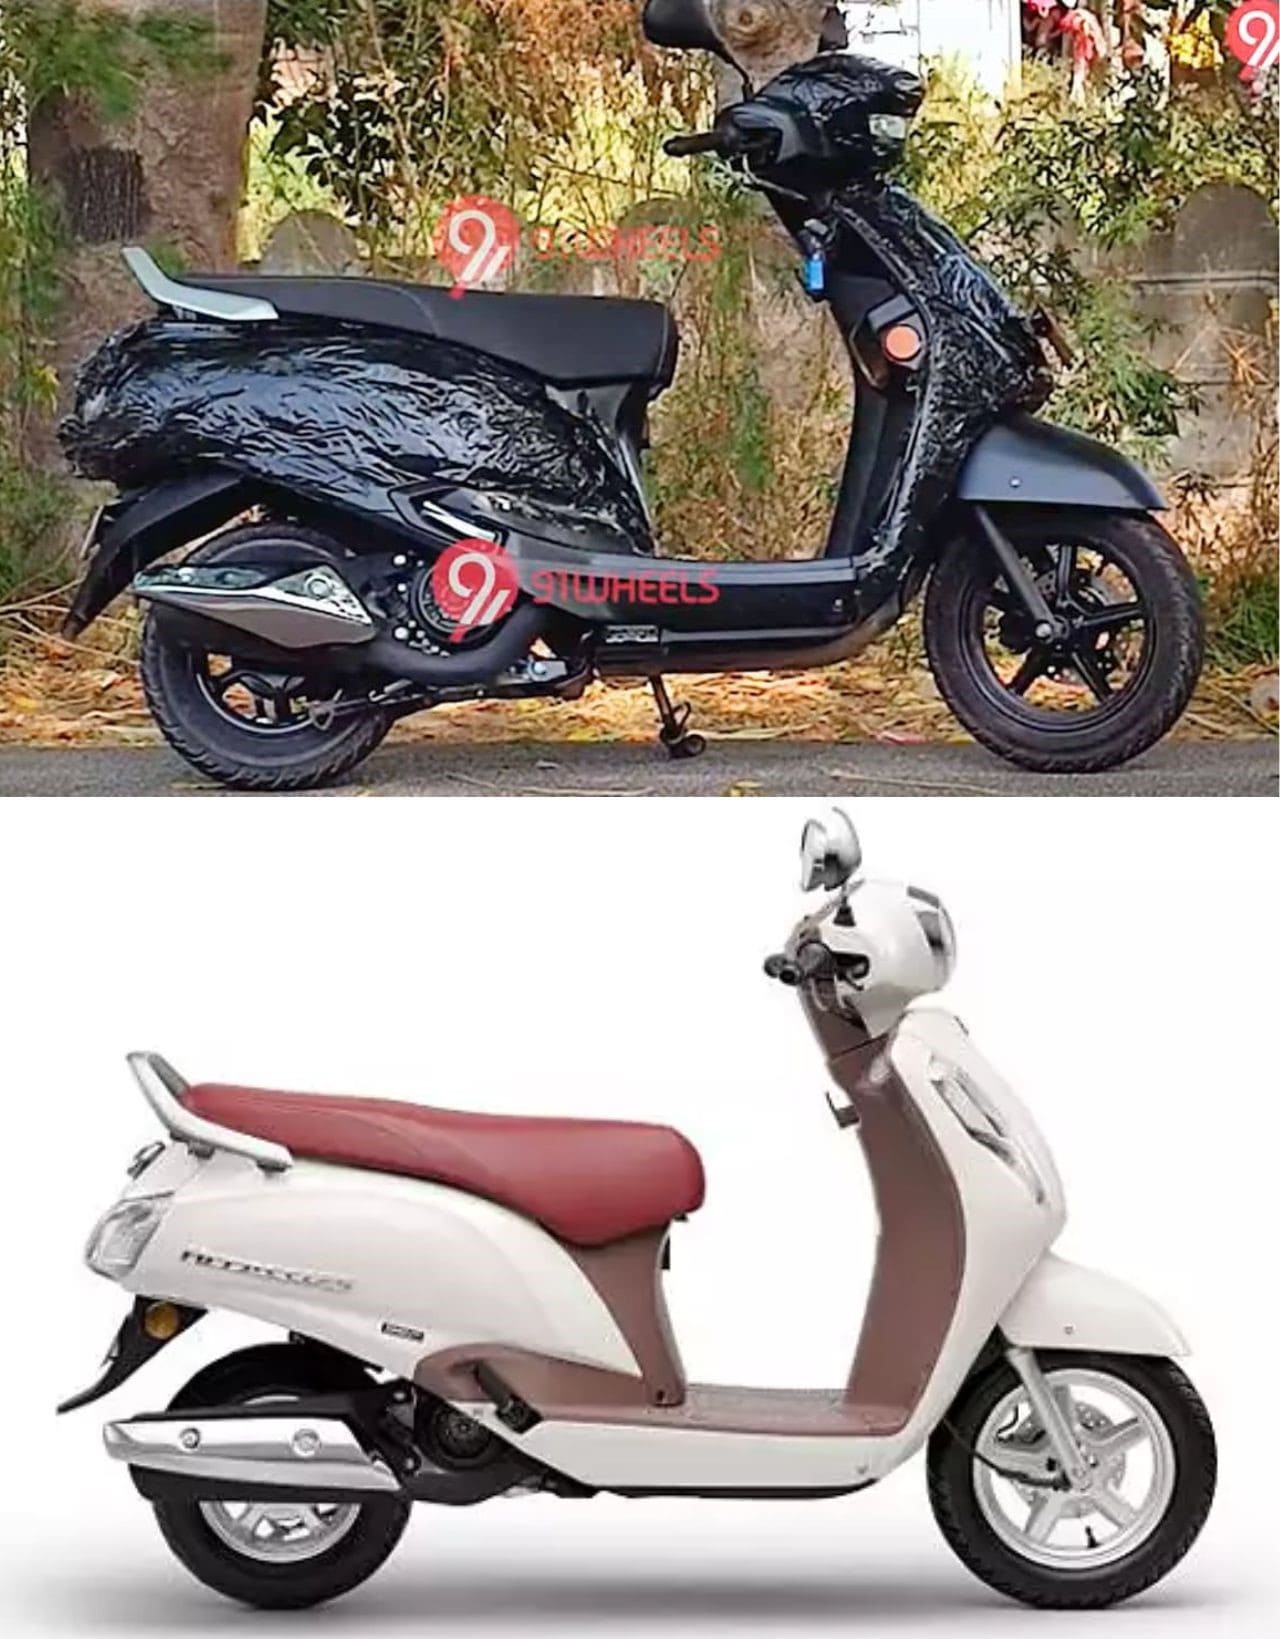 Suzuki Access 125 Facelift vs Current Model